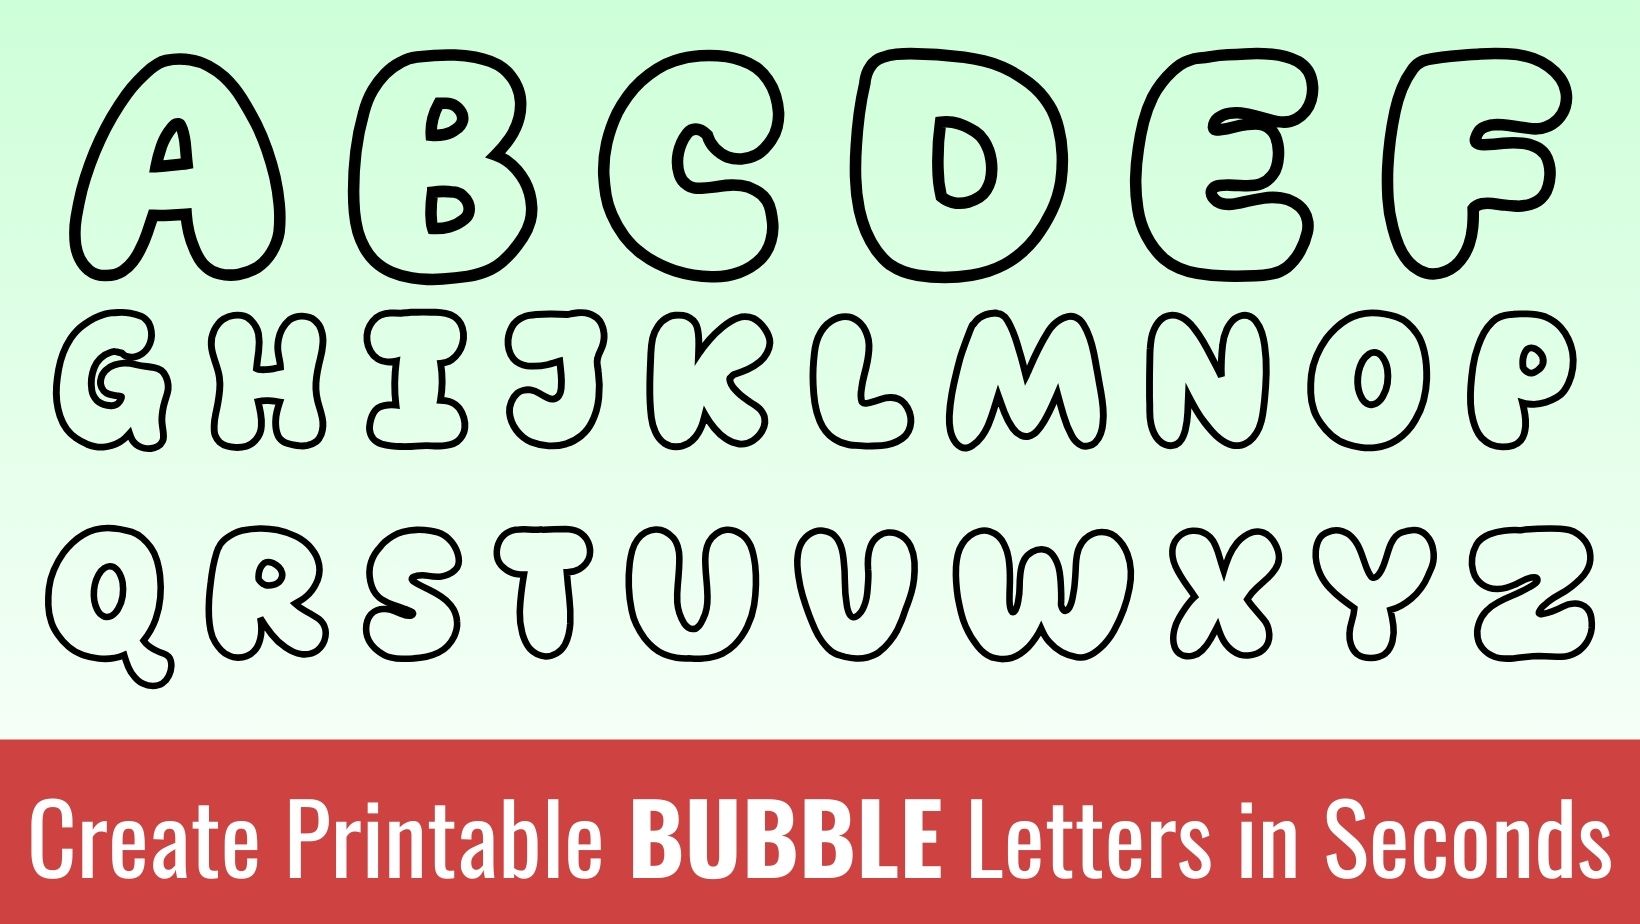 Free letter templates  Letters, Lettering, Letter templates